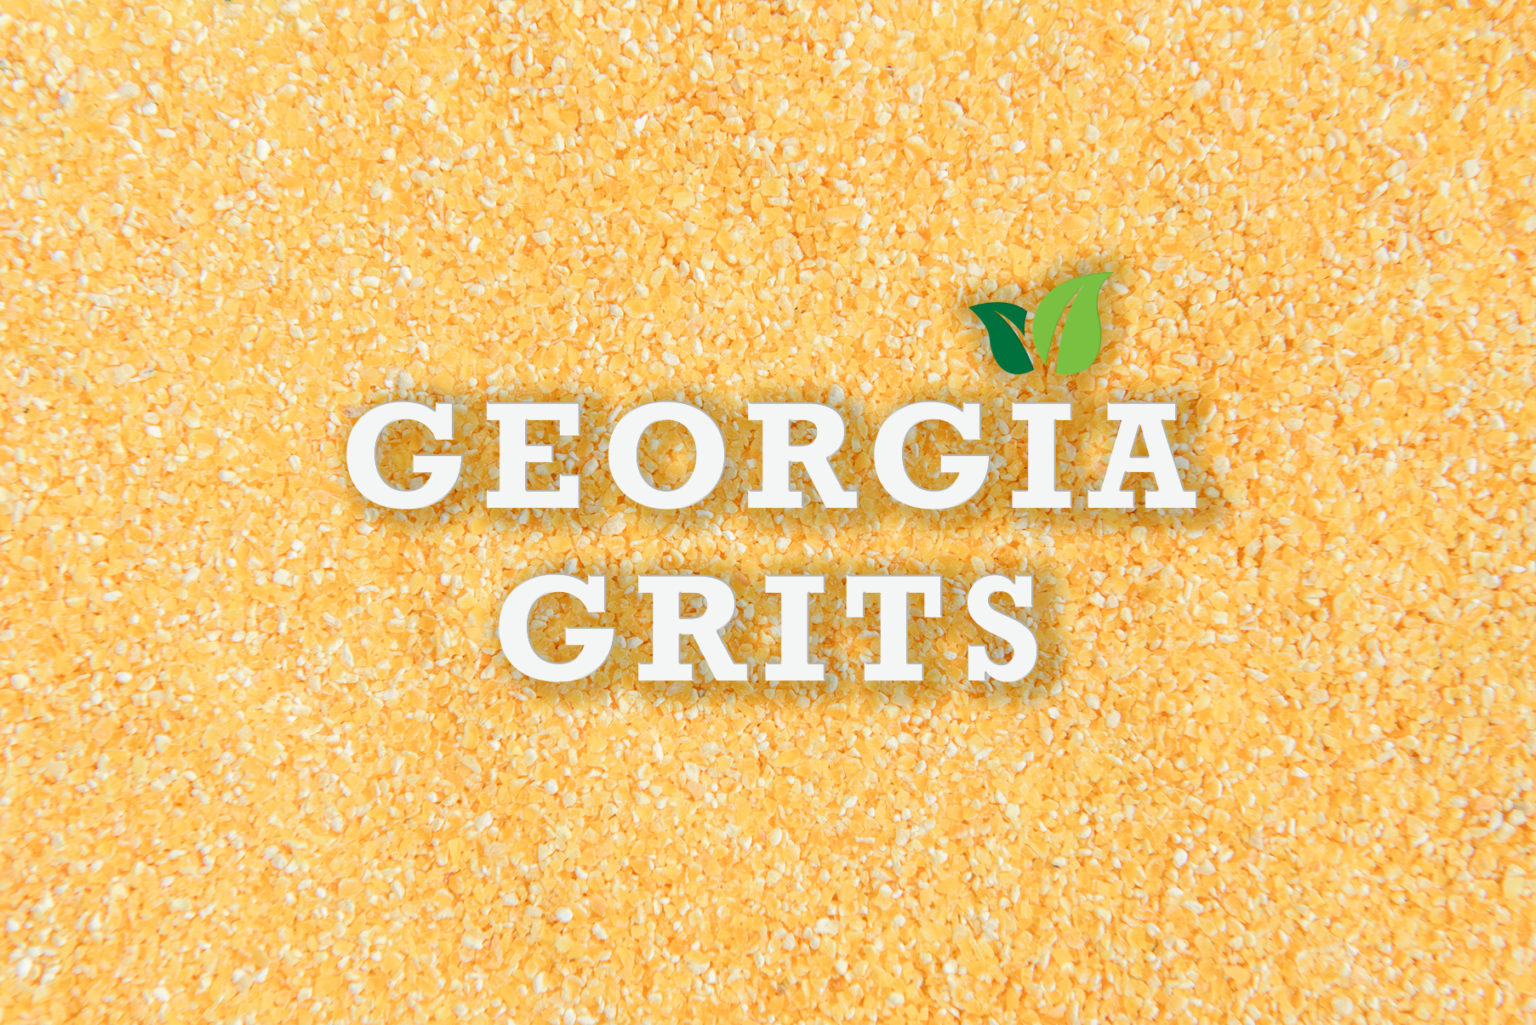 Georgia-Grits-copy-1536×1025